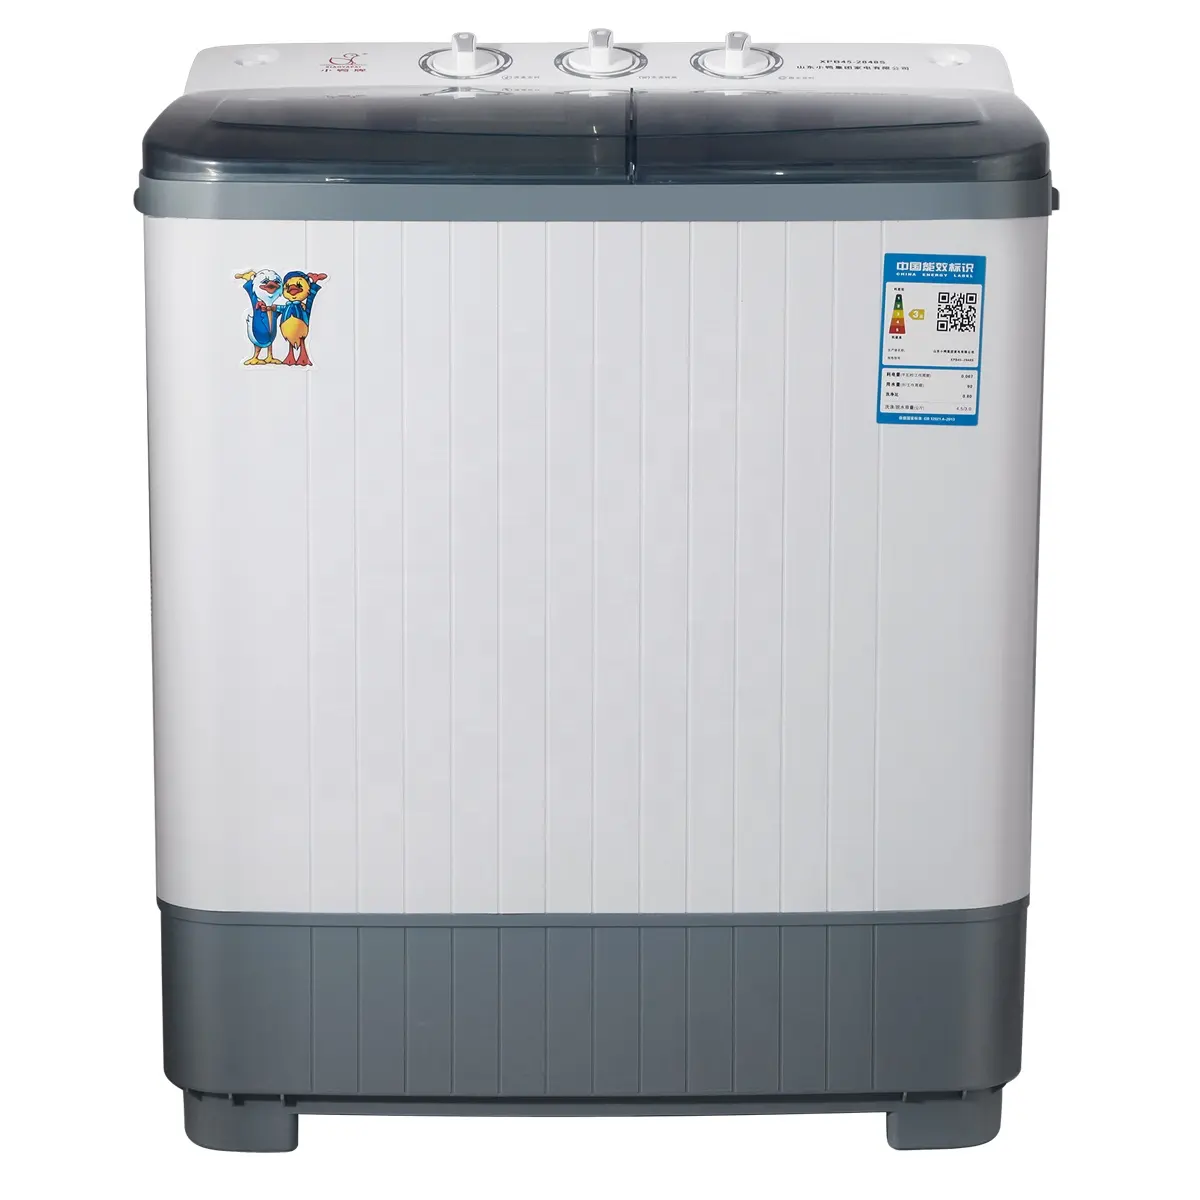 17LBS Mini Compact Portable Washing Machine Twin Tub Laundry Washer Spin Dryer